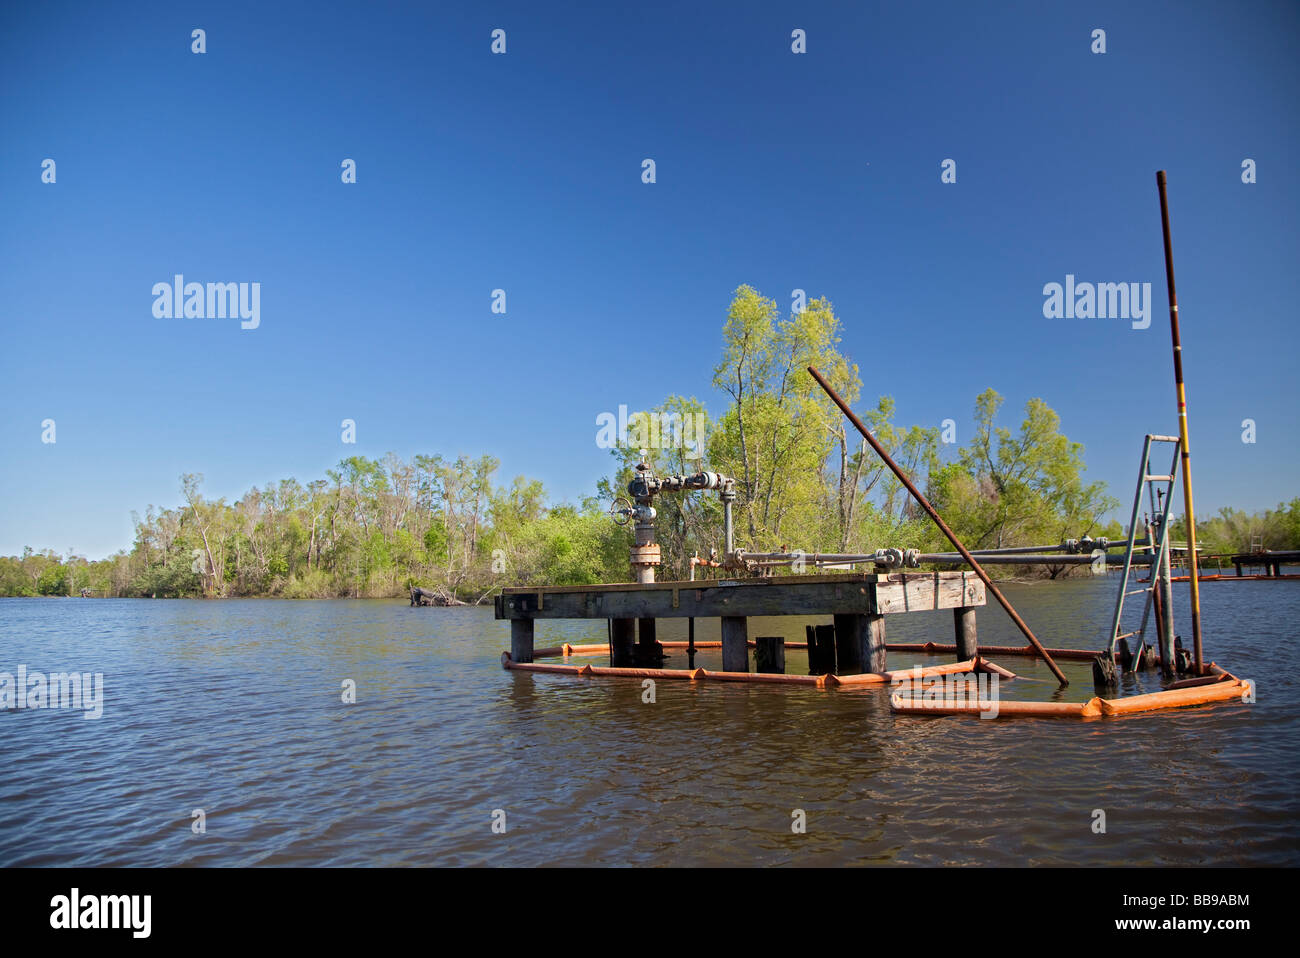 Bayou Sorrel Louisiana Oil and gas production in the Atchafalaya River Basin swamp Stock Photo